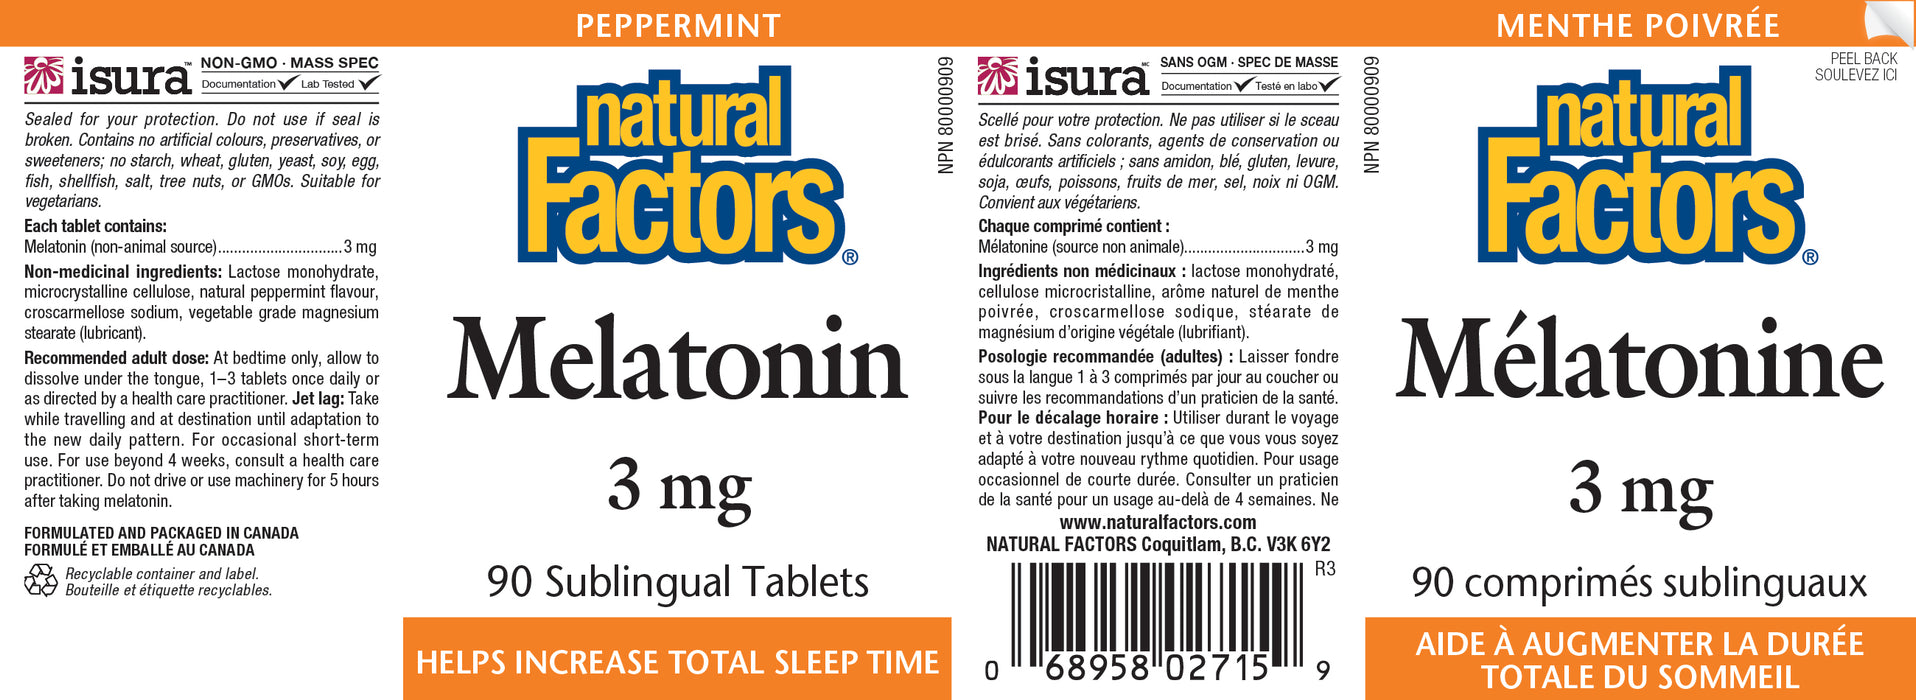 Natural Factors Melatonin - 3mg Peppermint - 90 Sublingual Tablets